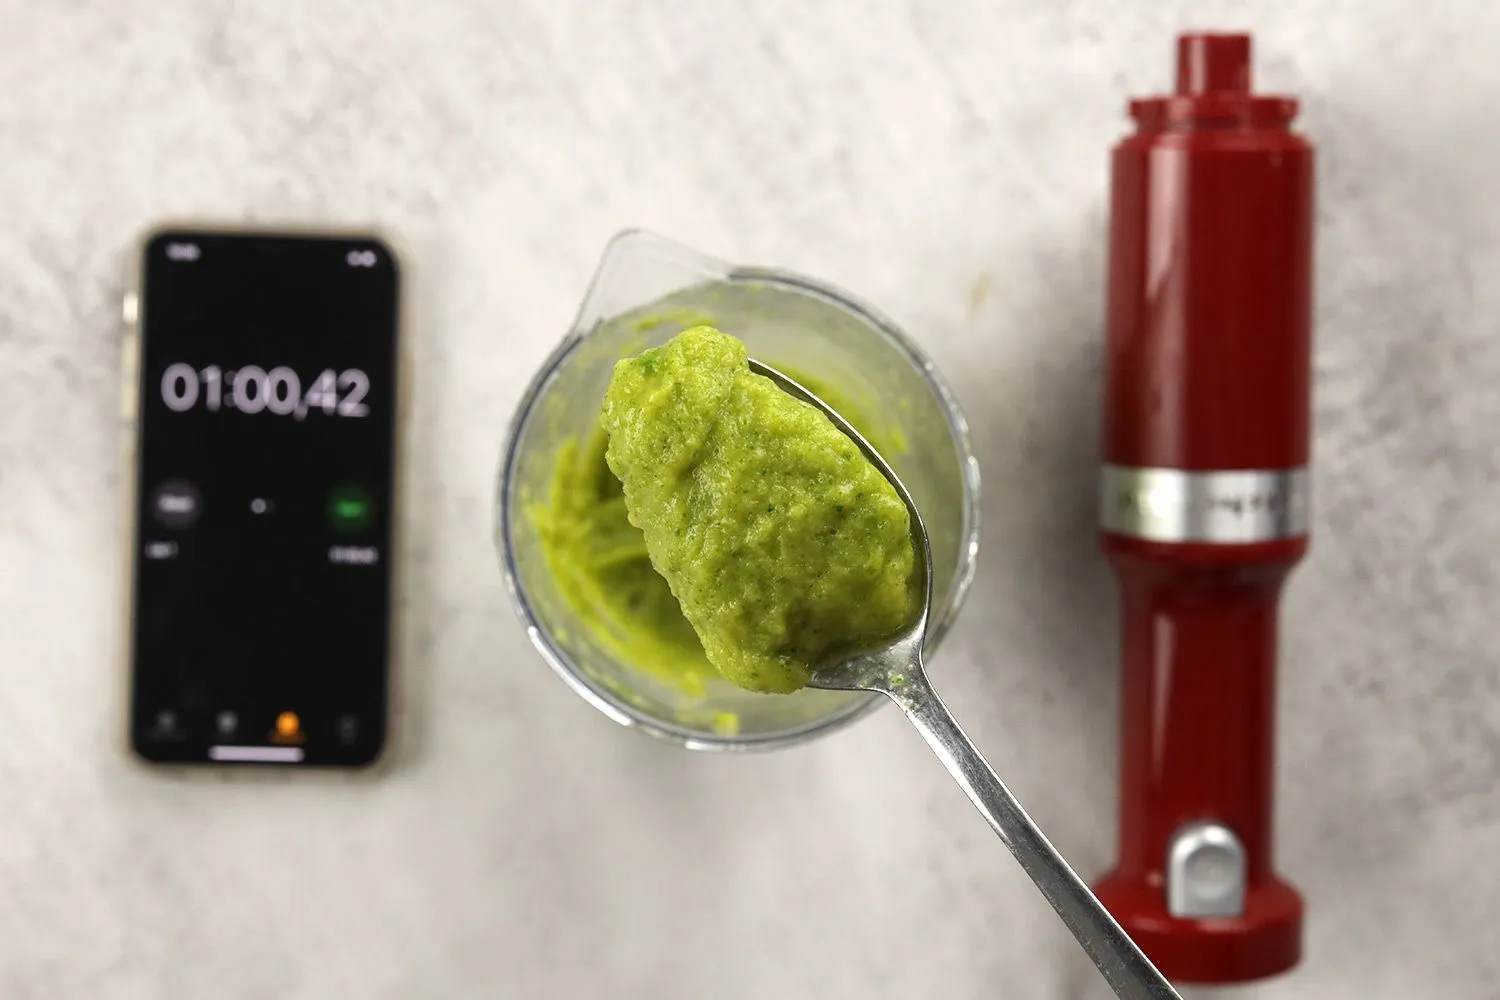 KitchenAid Cordless Hand Blender In-depth Review - Healthy Kitchen 101